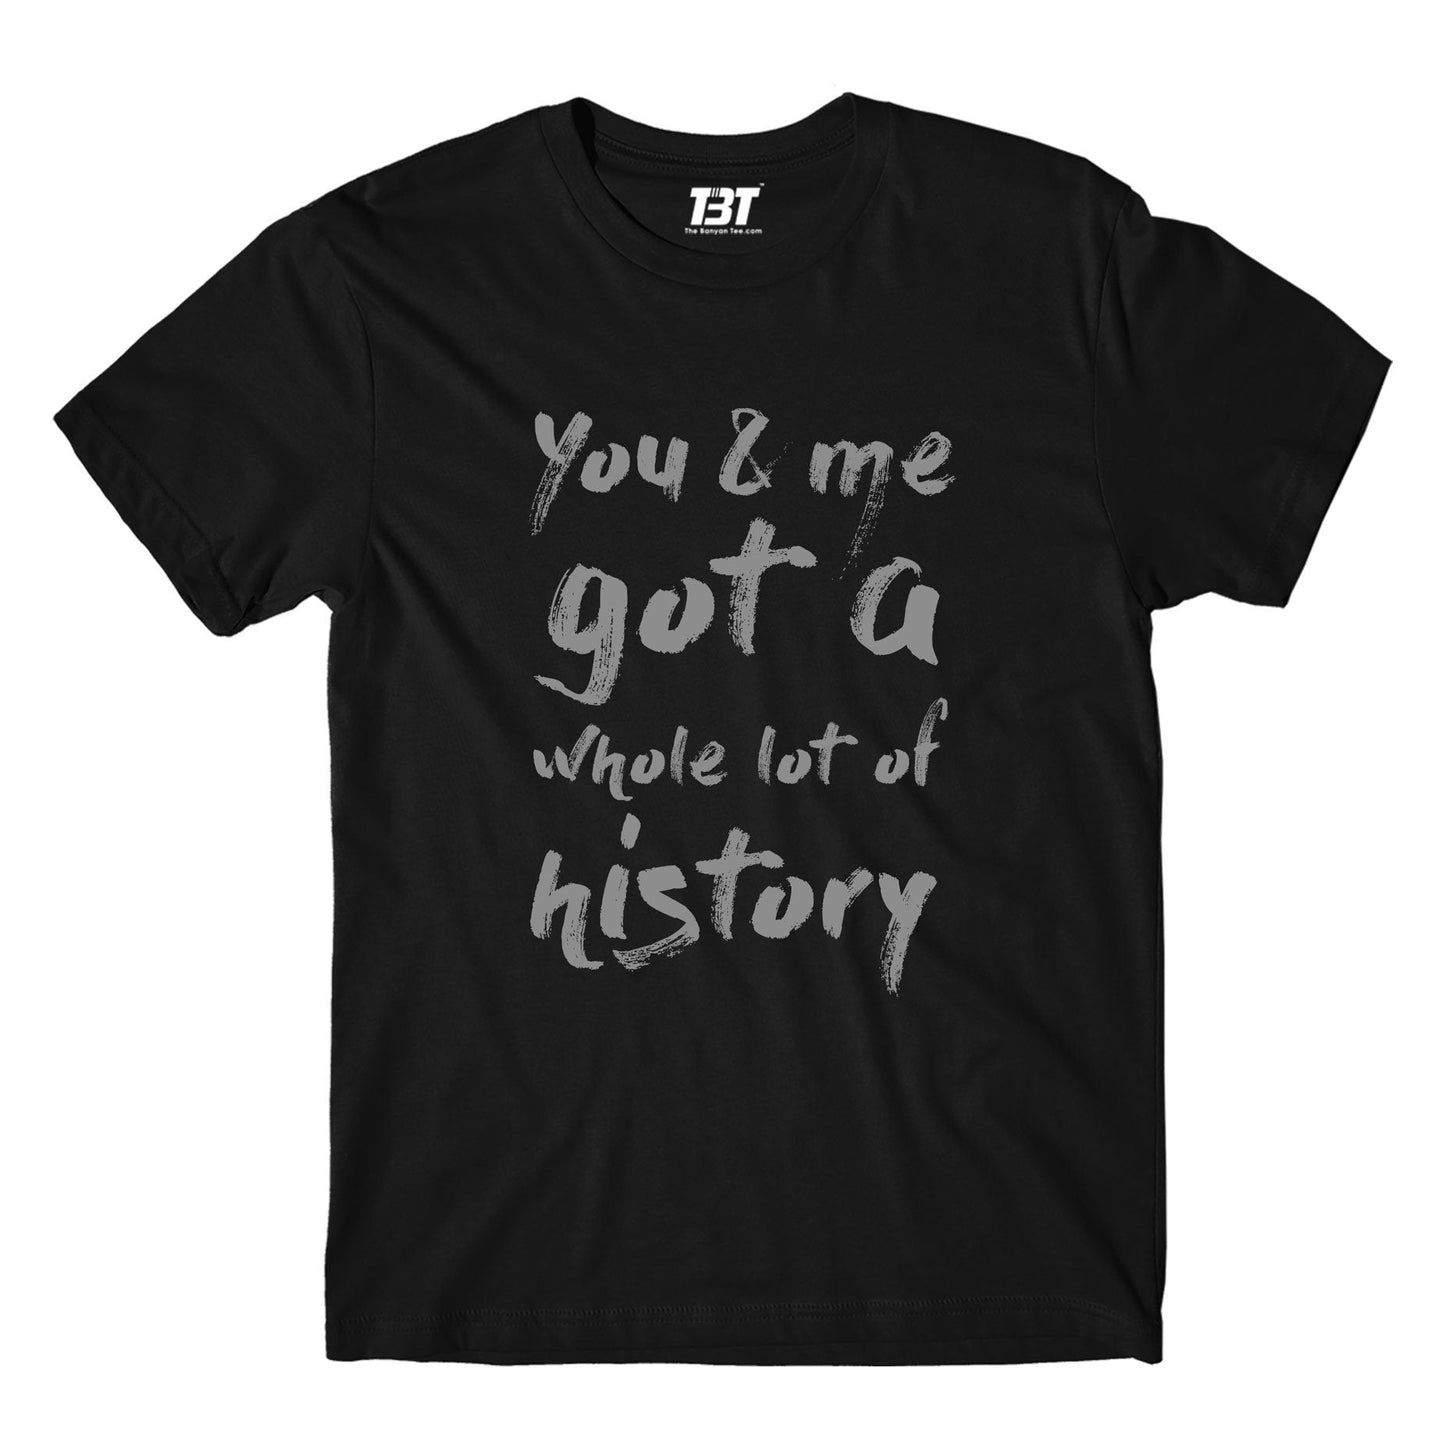 One Direction T-shirt - History T-shirt The Banyan Tee TBT